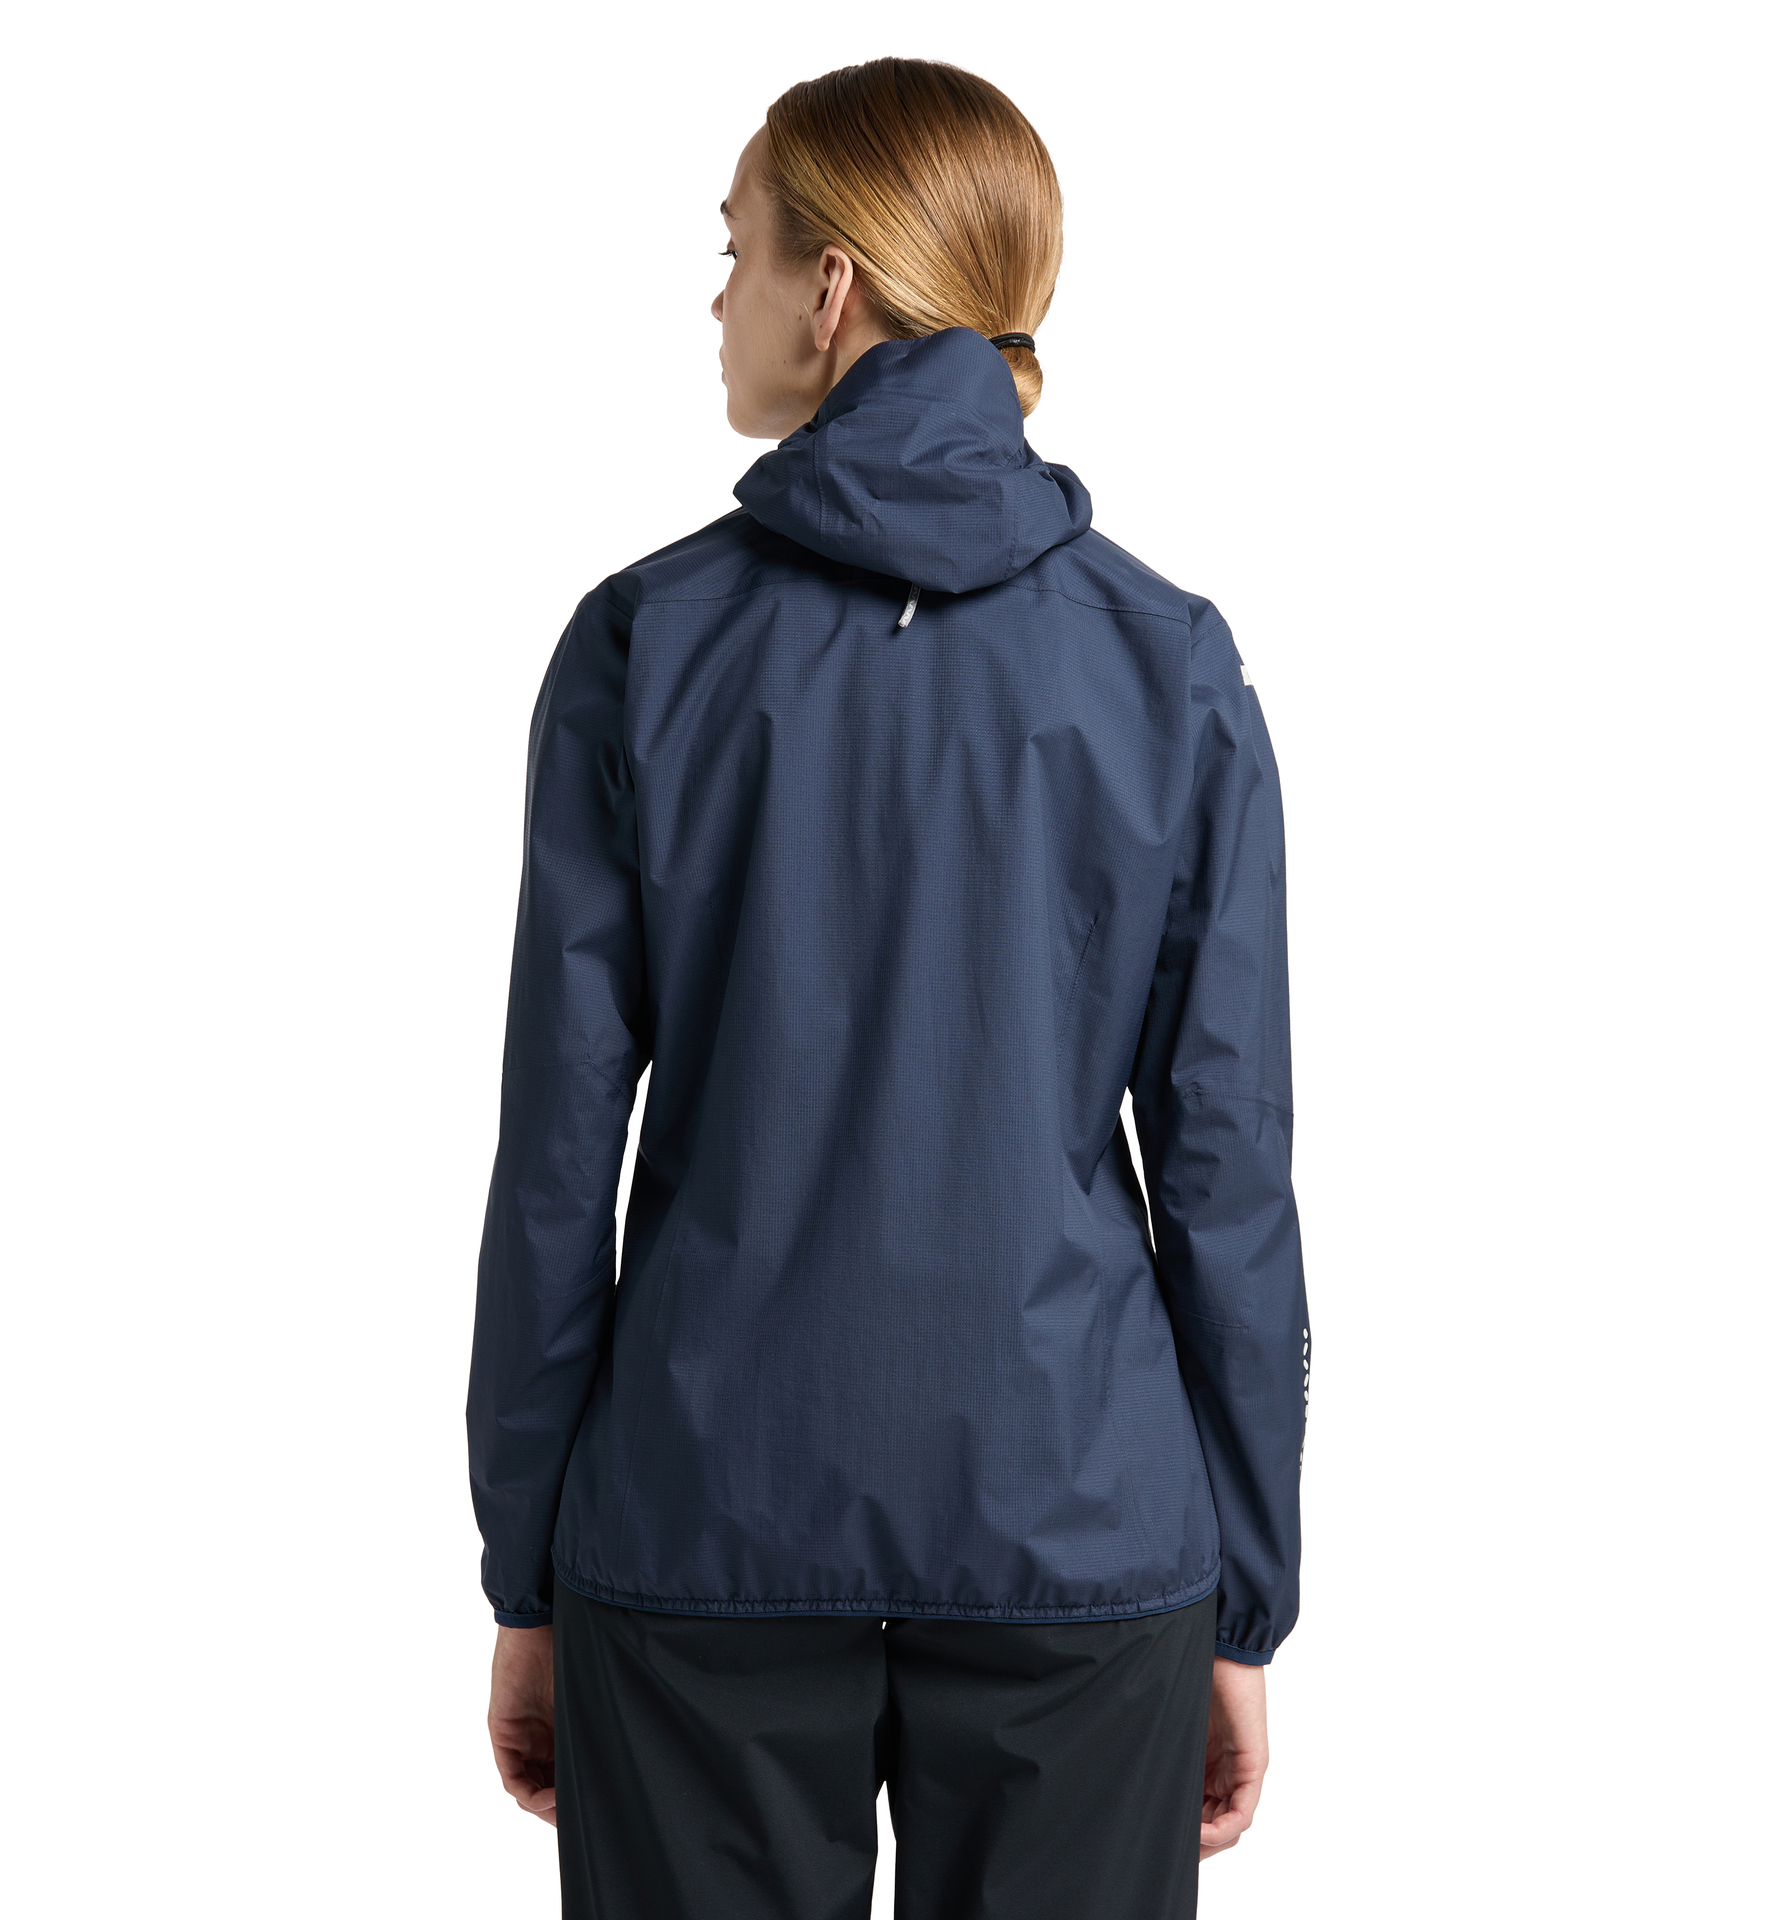 L.I.M Proof Jacket Women | Tarn Blue | Lightweight jackets 